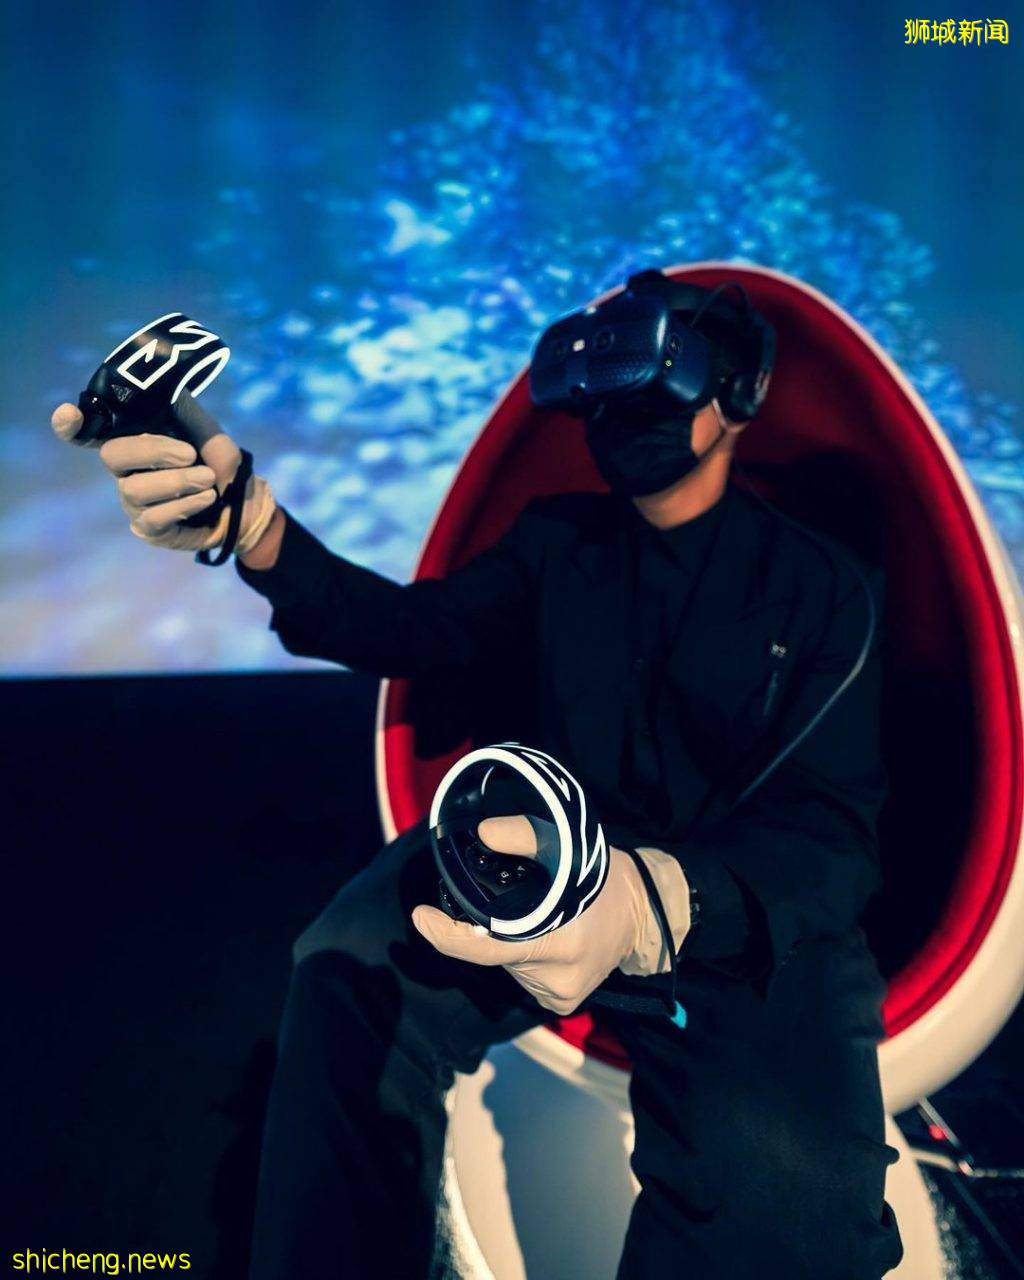 ArtScience Museum“VR Gallery”沉浸式體驗！戴好頭盔、穿進虛擬世界，感受超現實藝術作品💫